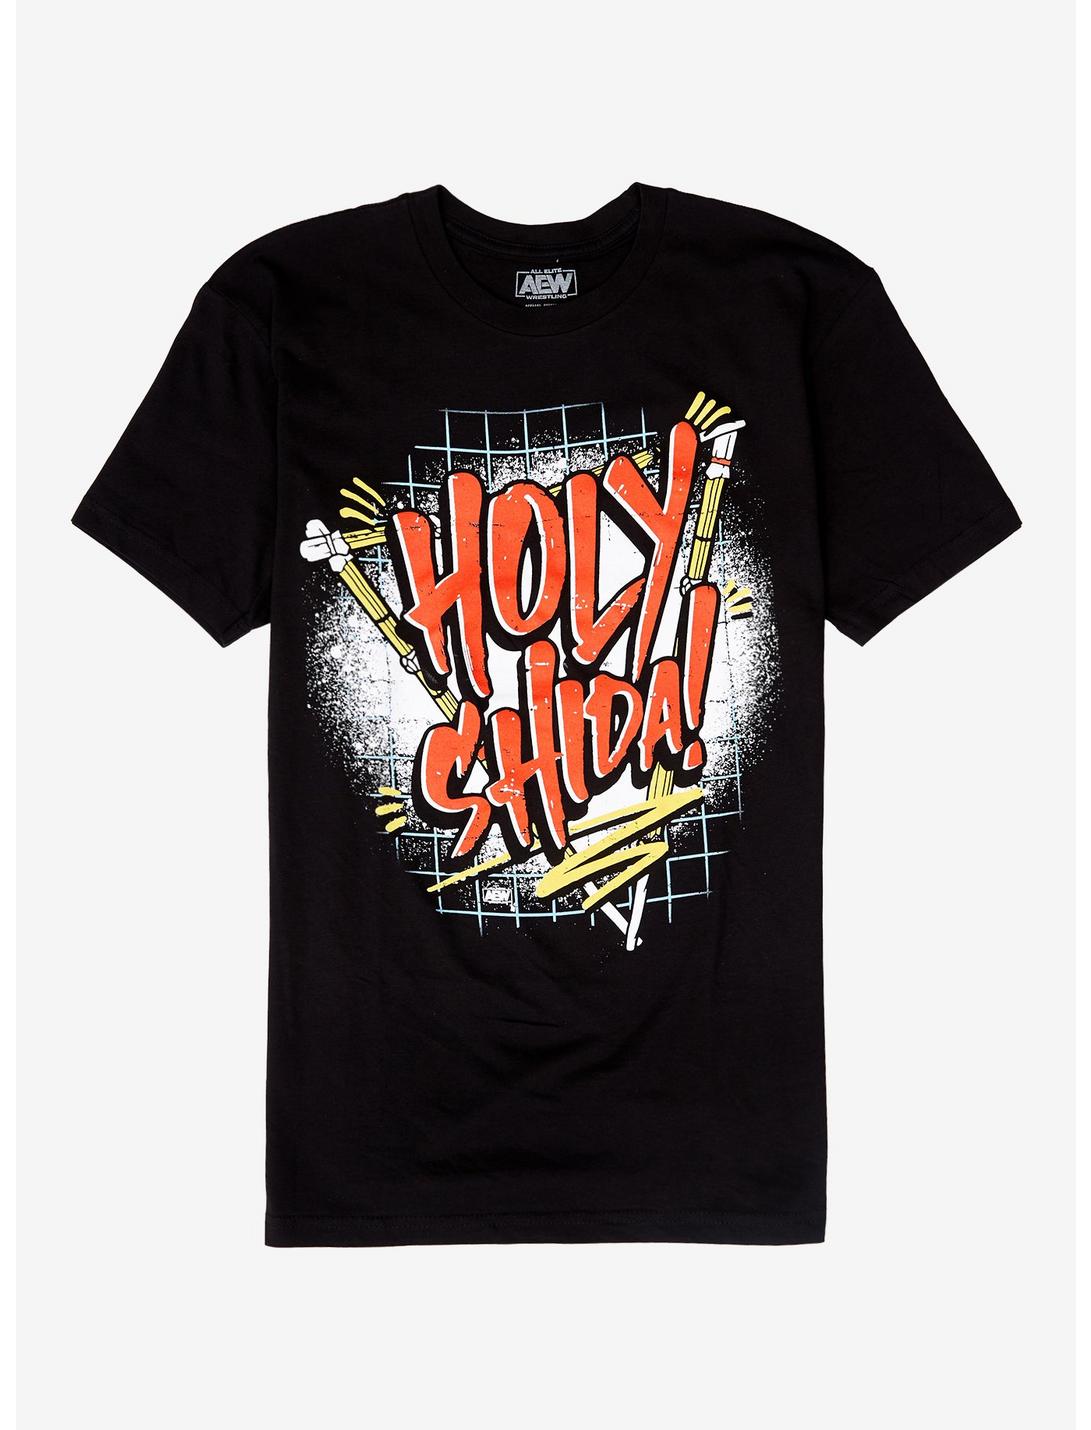 All Elite Wrestling Holy Shida! T-Shirt, BLACK, hi-res